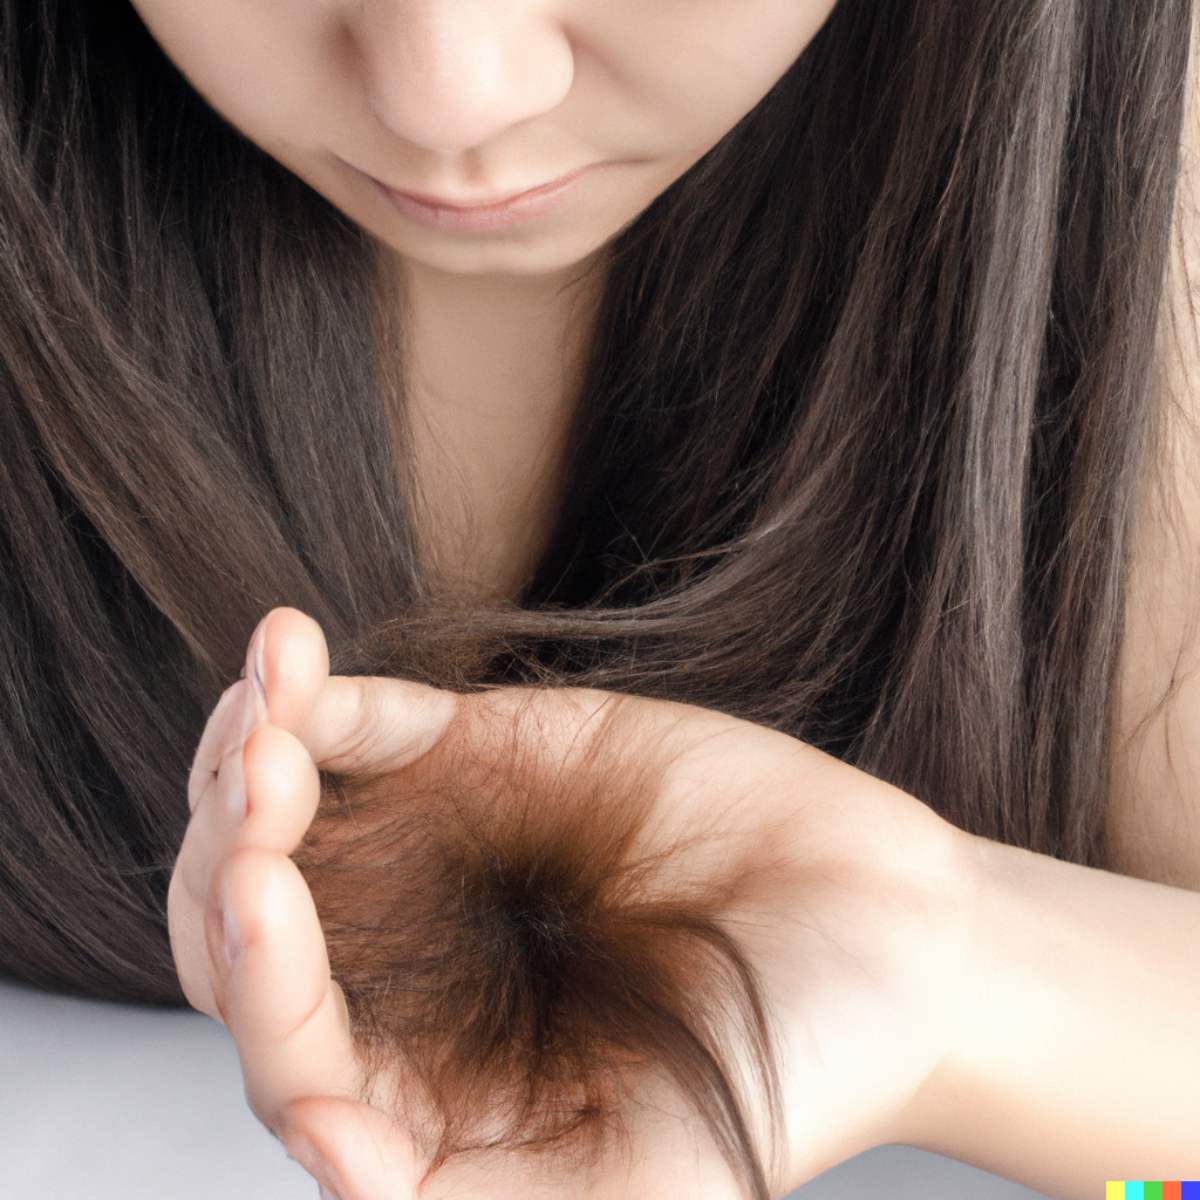 Post-pregnancy hair loss